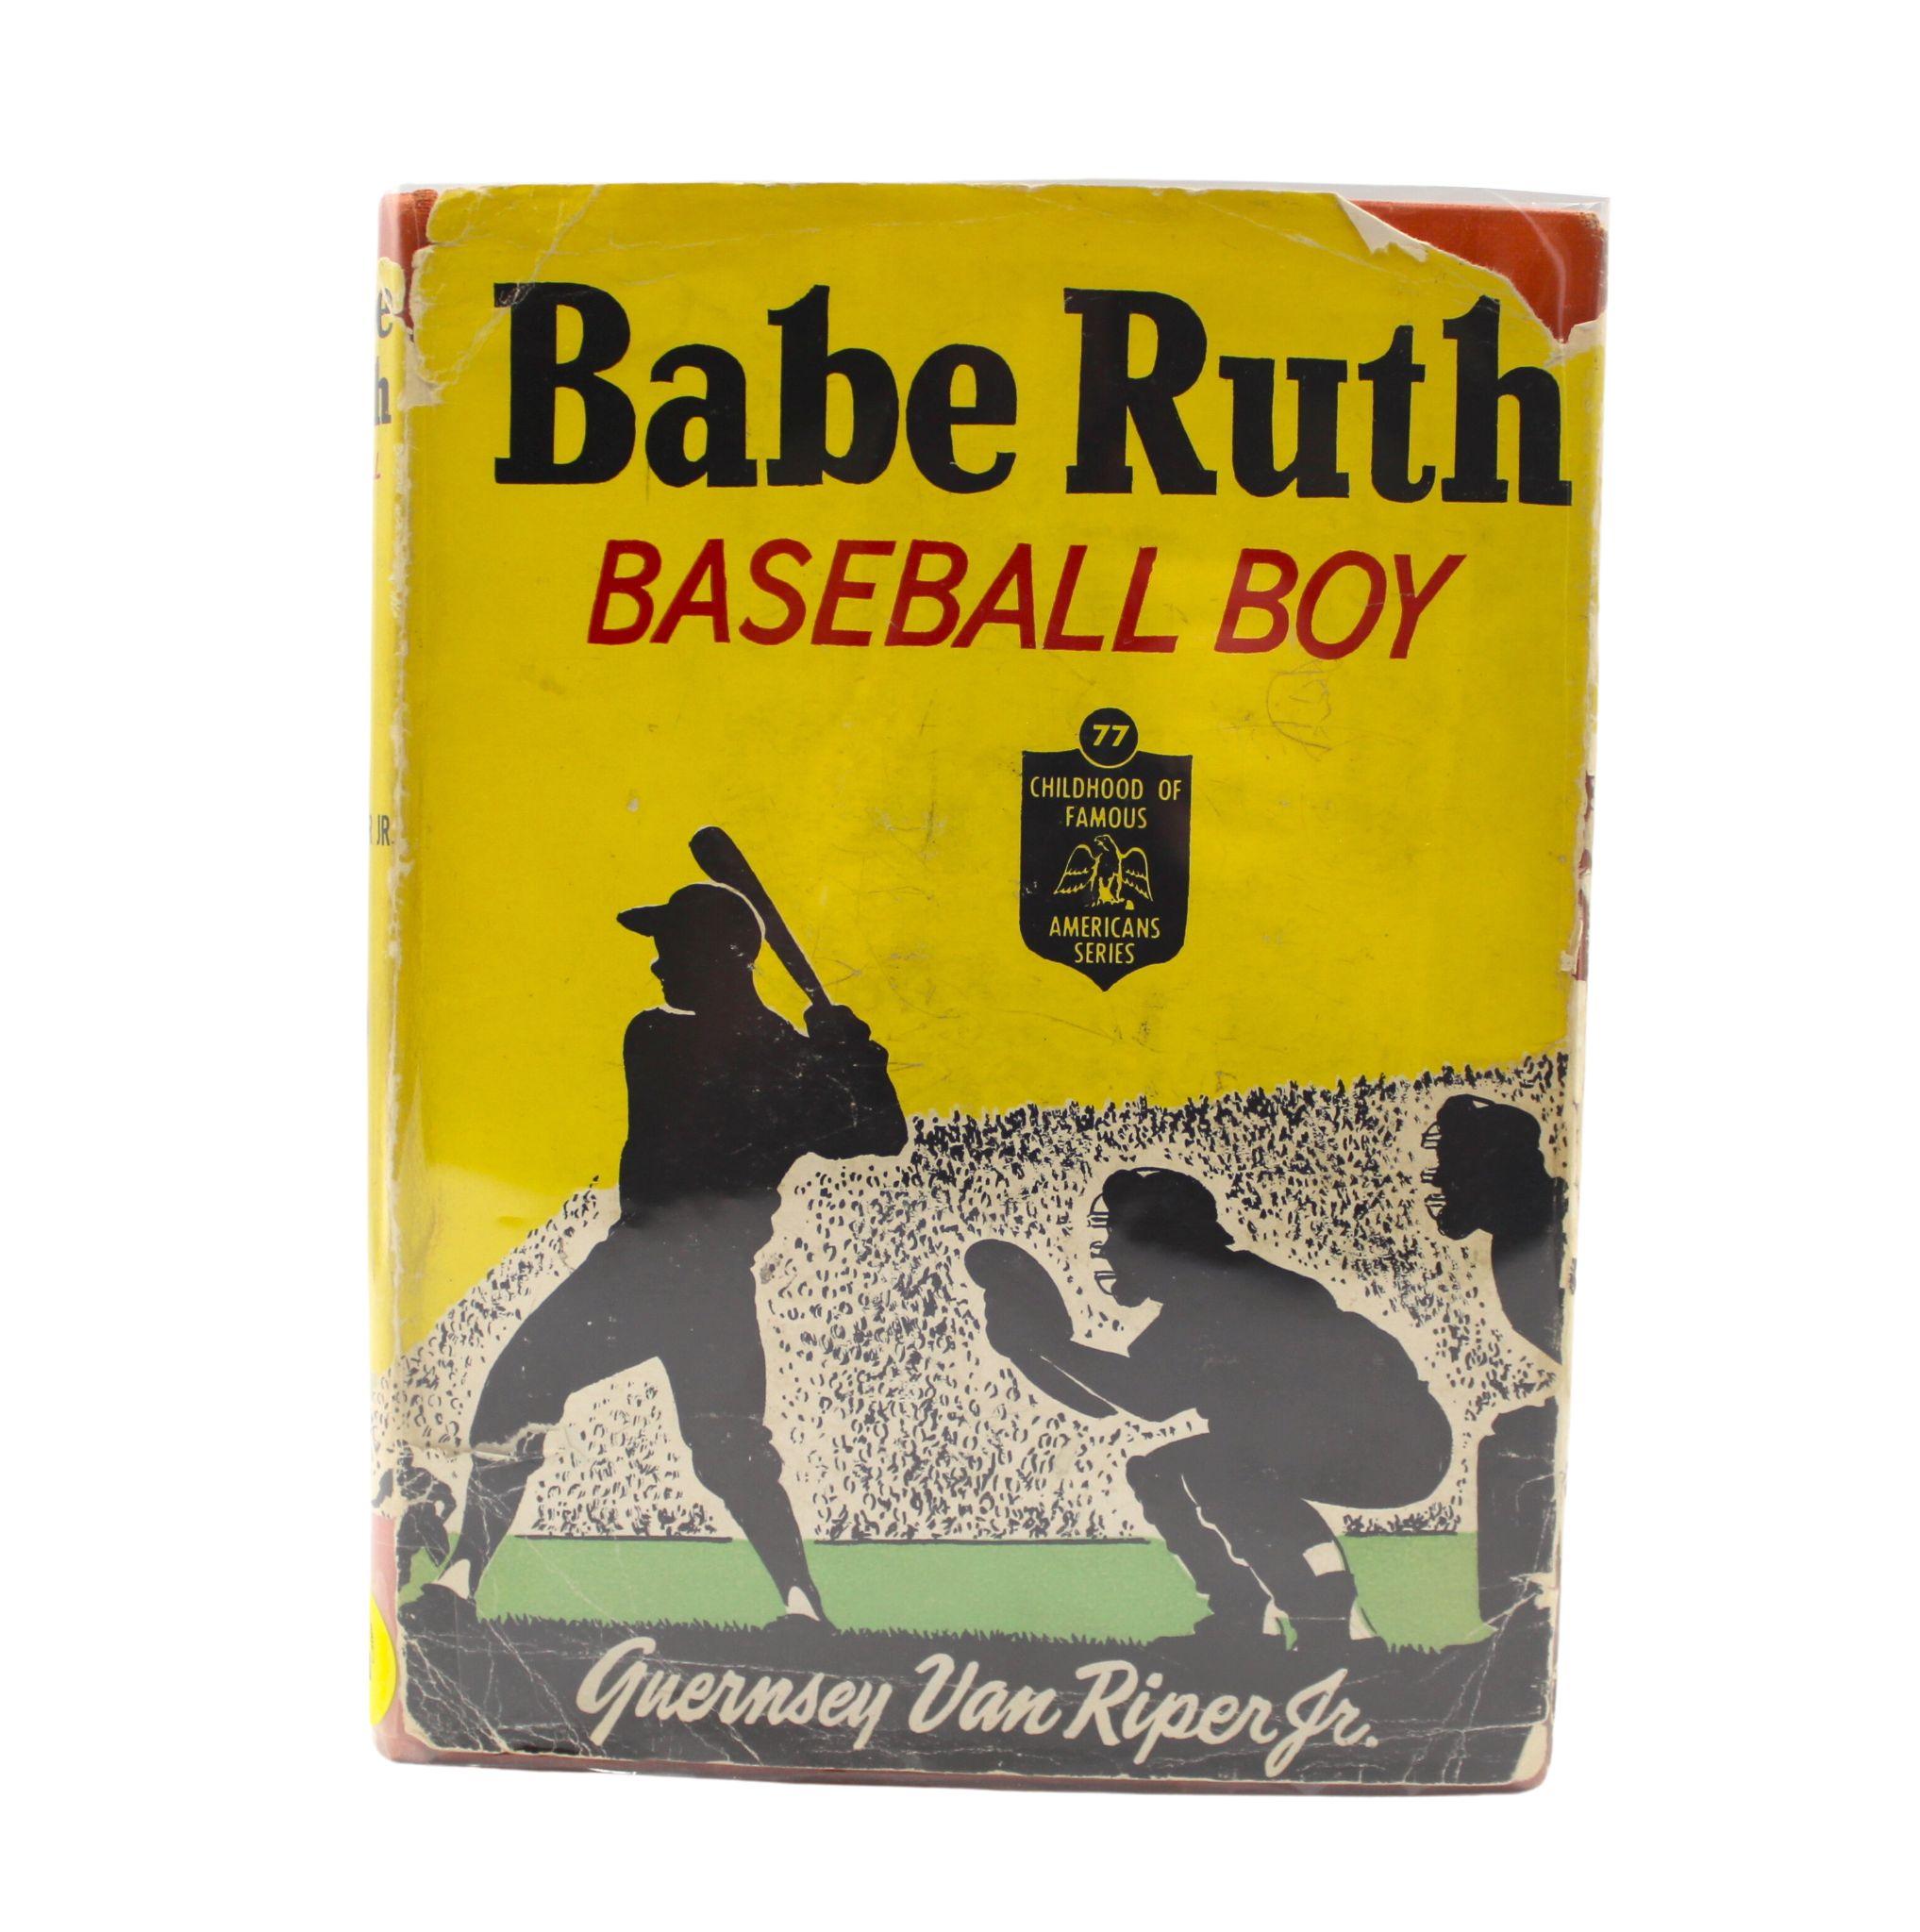 Babe Ruth, Baseball Boy by Guernsey Van Riper Jr., First Edition, 1954 1